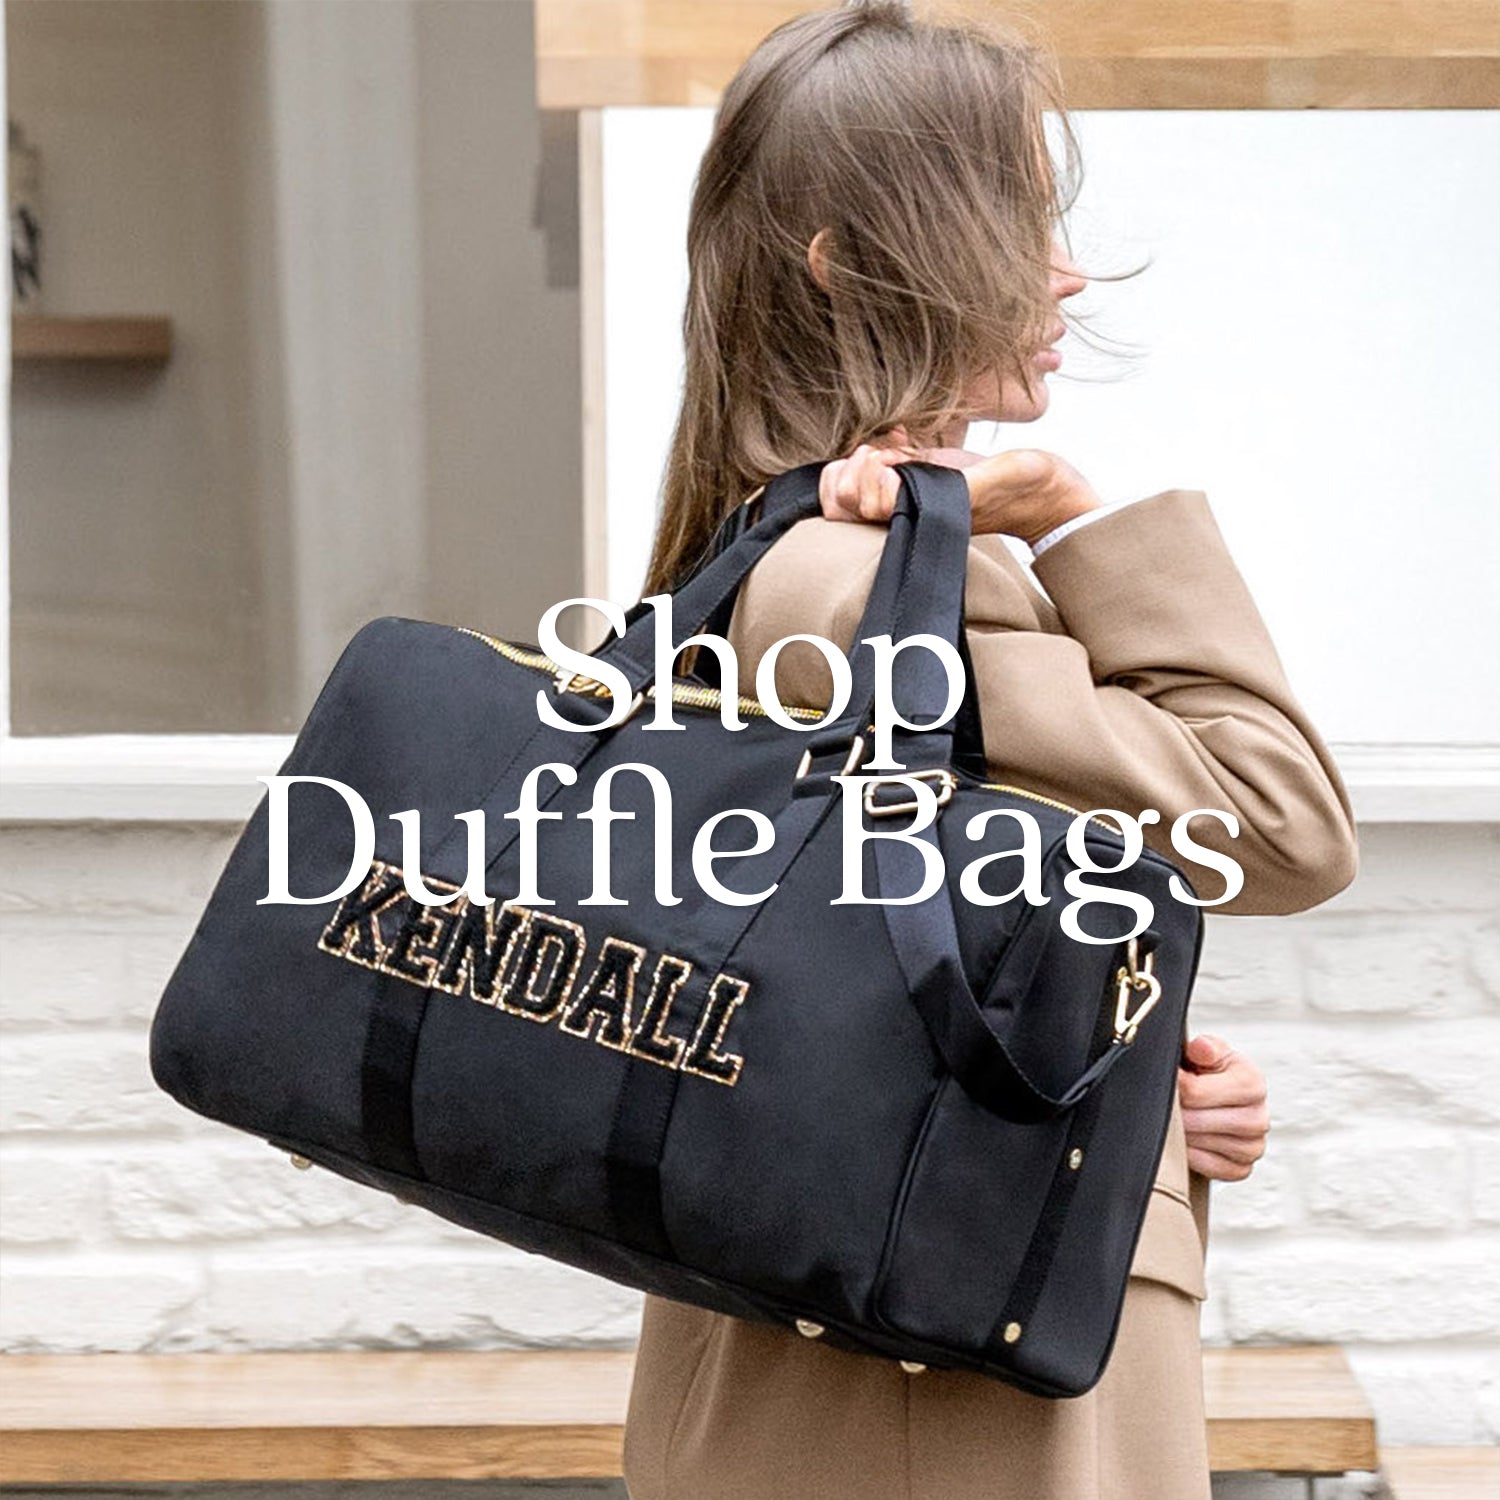 All Duffle Bags  Customizable Duffle Bags - Stoney Clover Lane